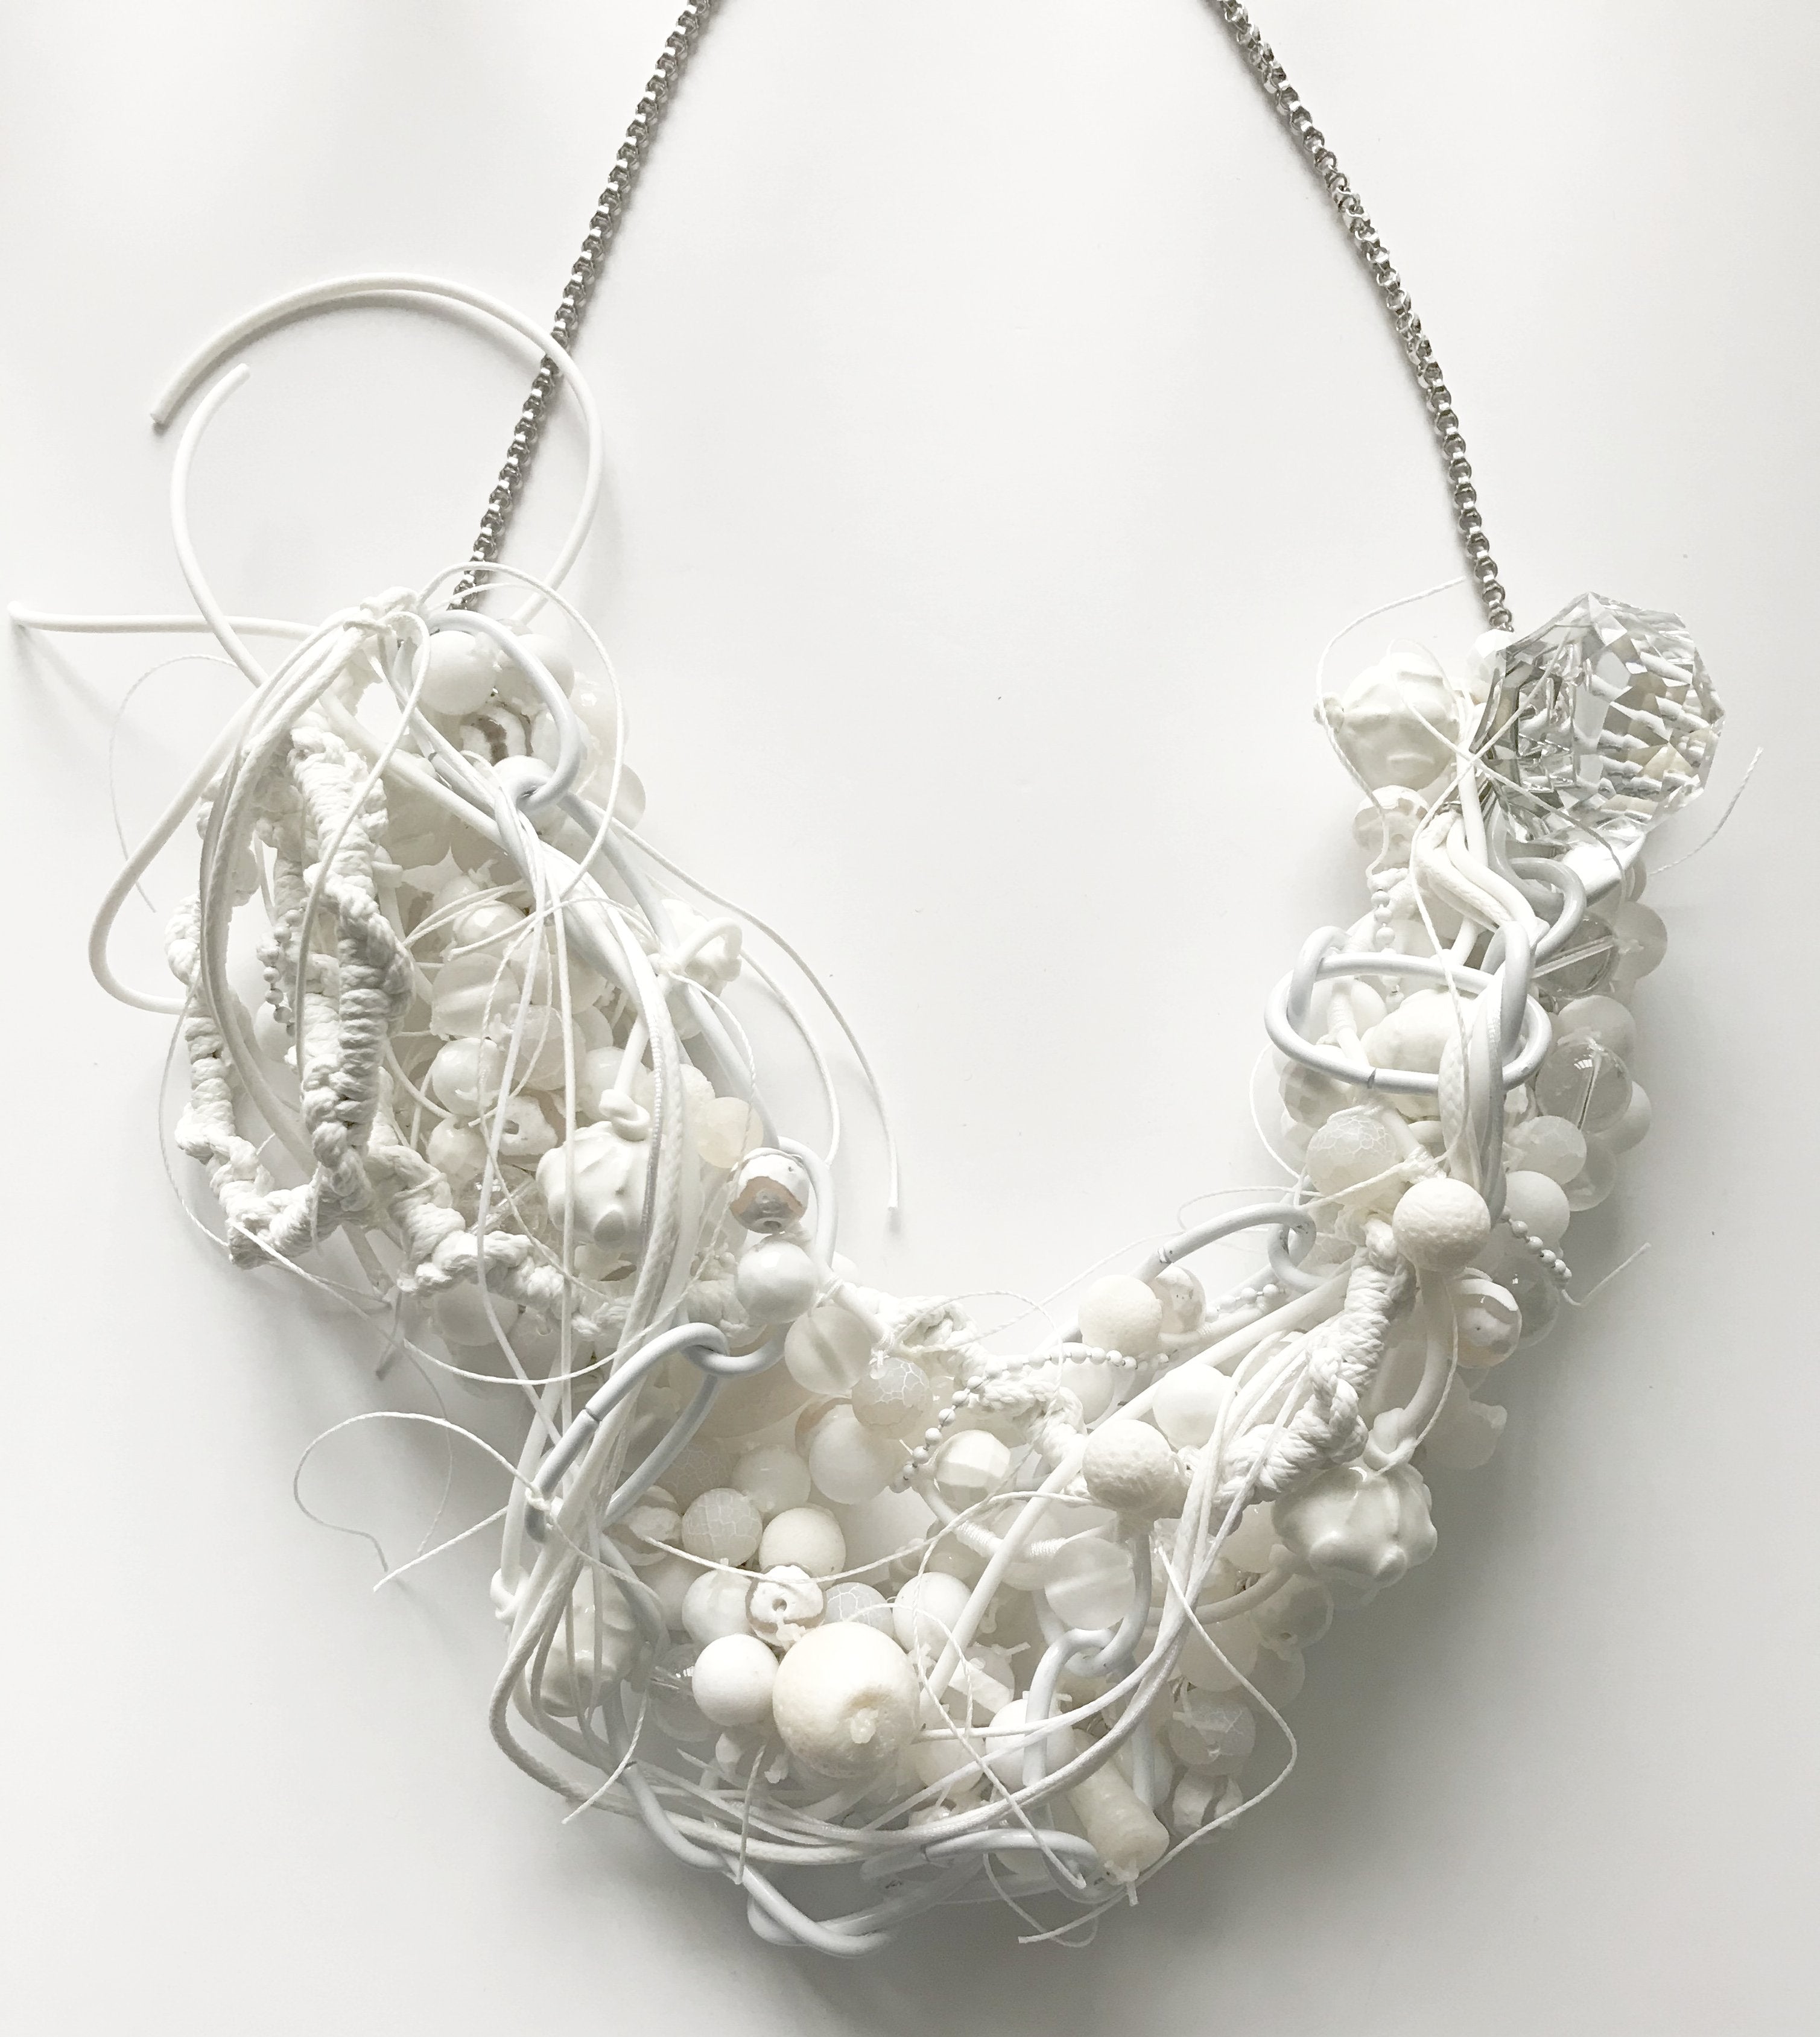 All white gemstone necklace